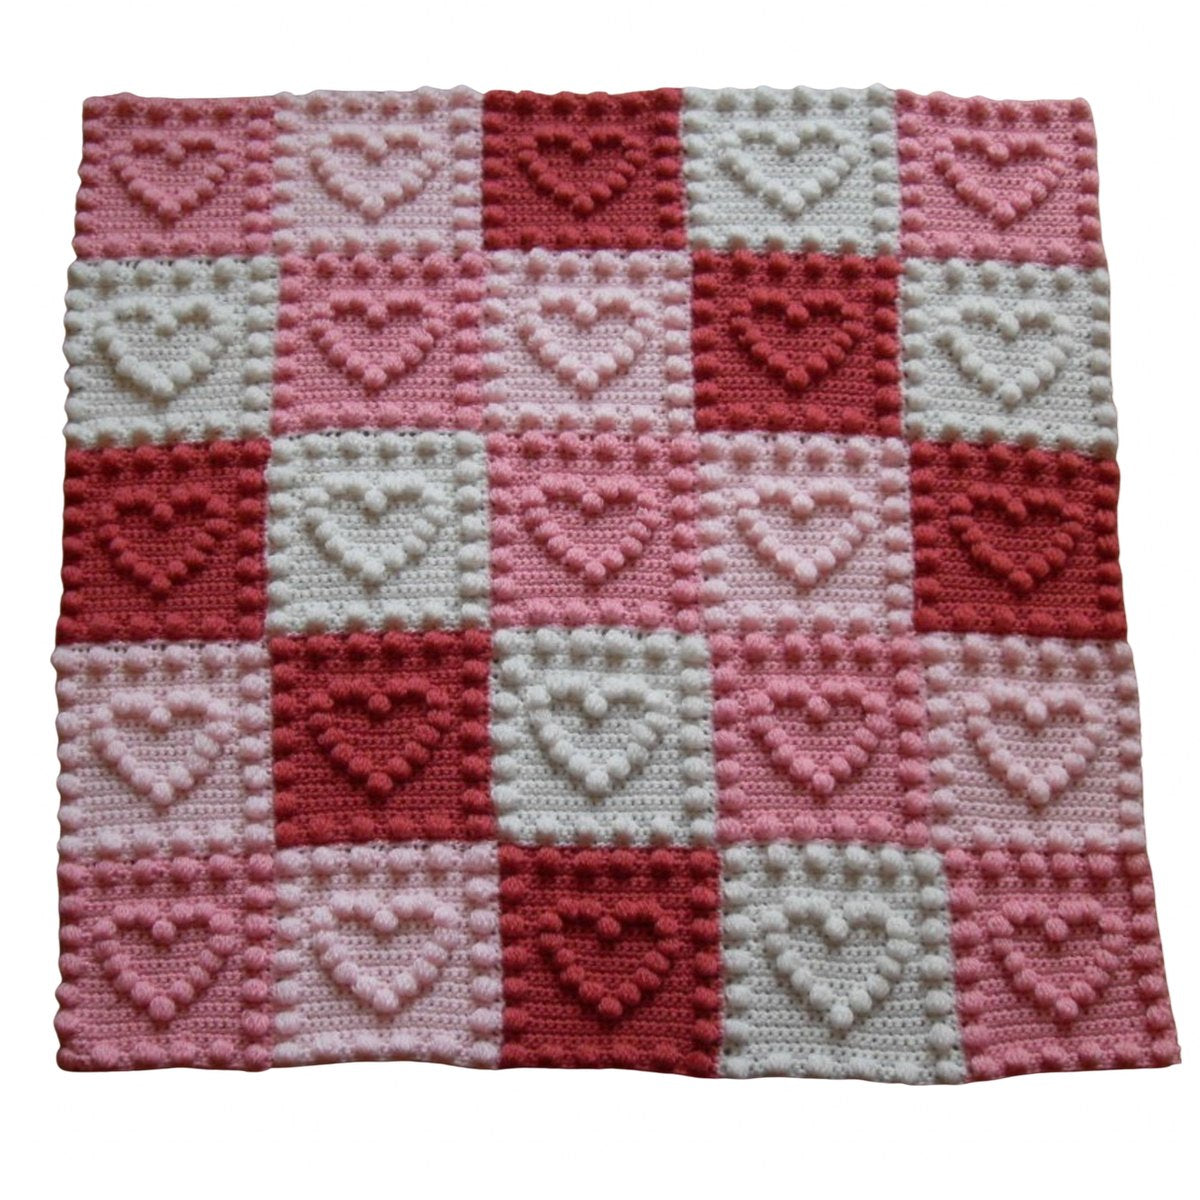 Crochet Patterns by Peach Unicorn Designs